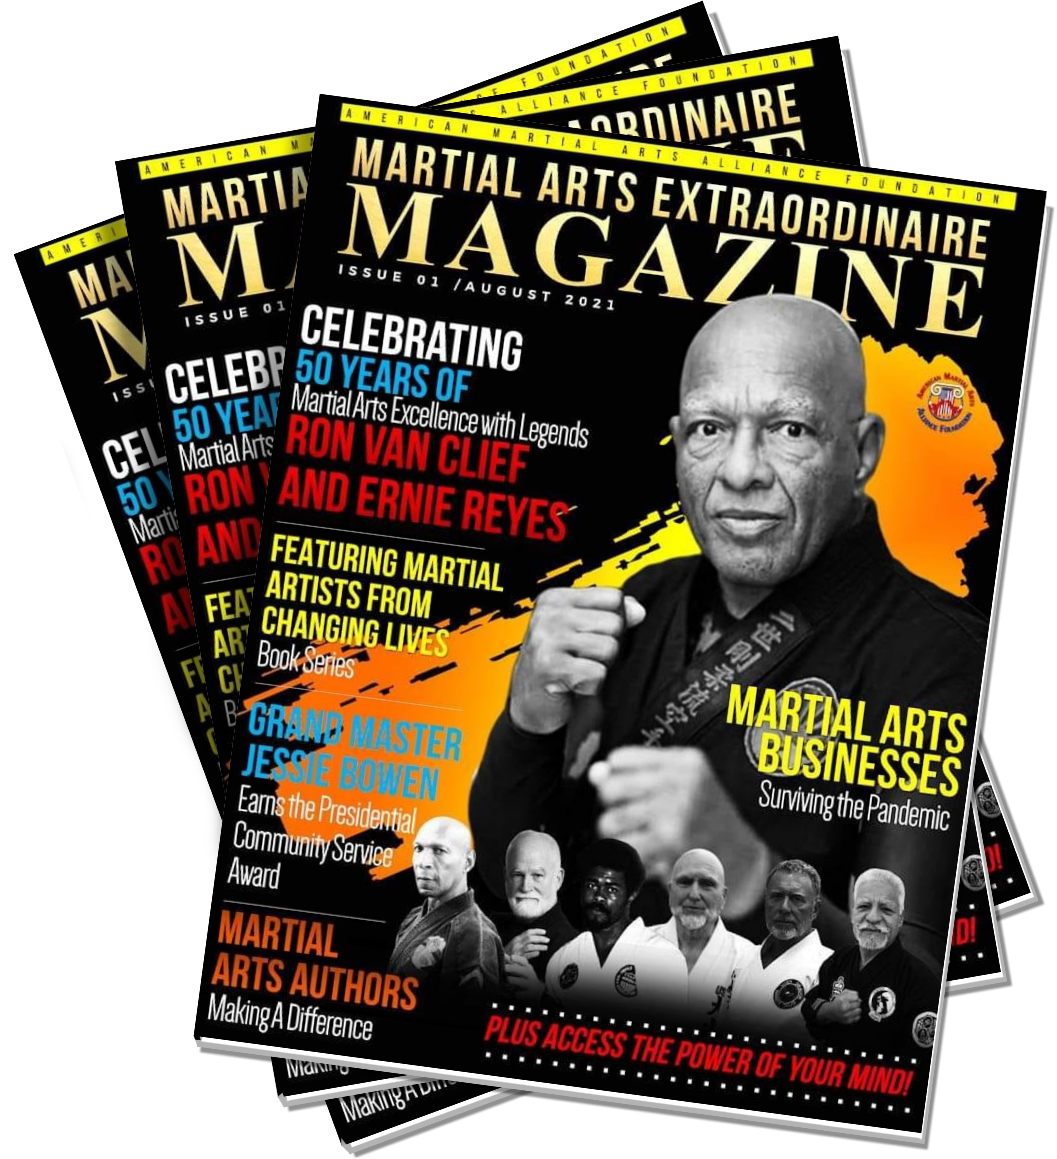 Martial Arts Extraordinaire Magazine, Limited Hardcover